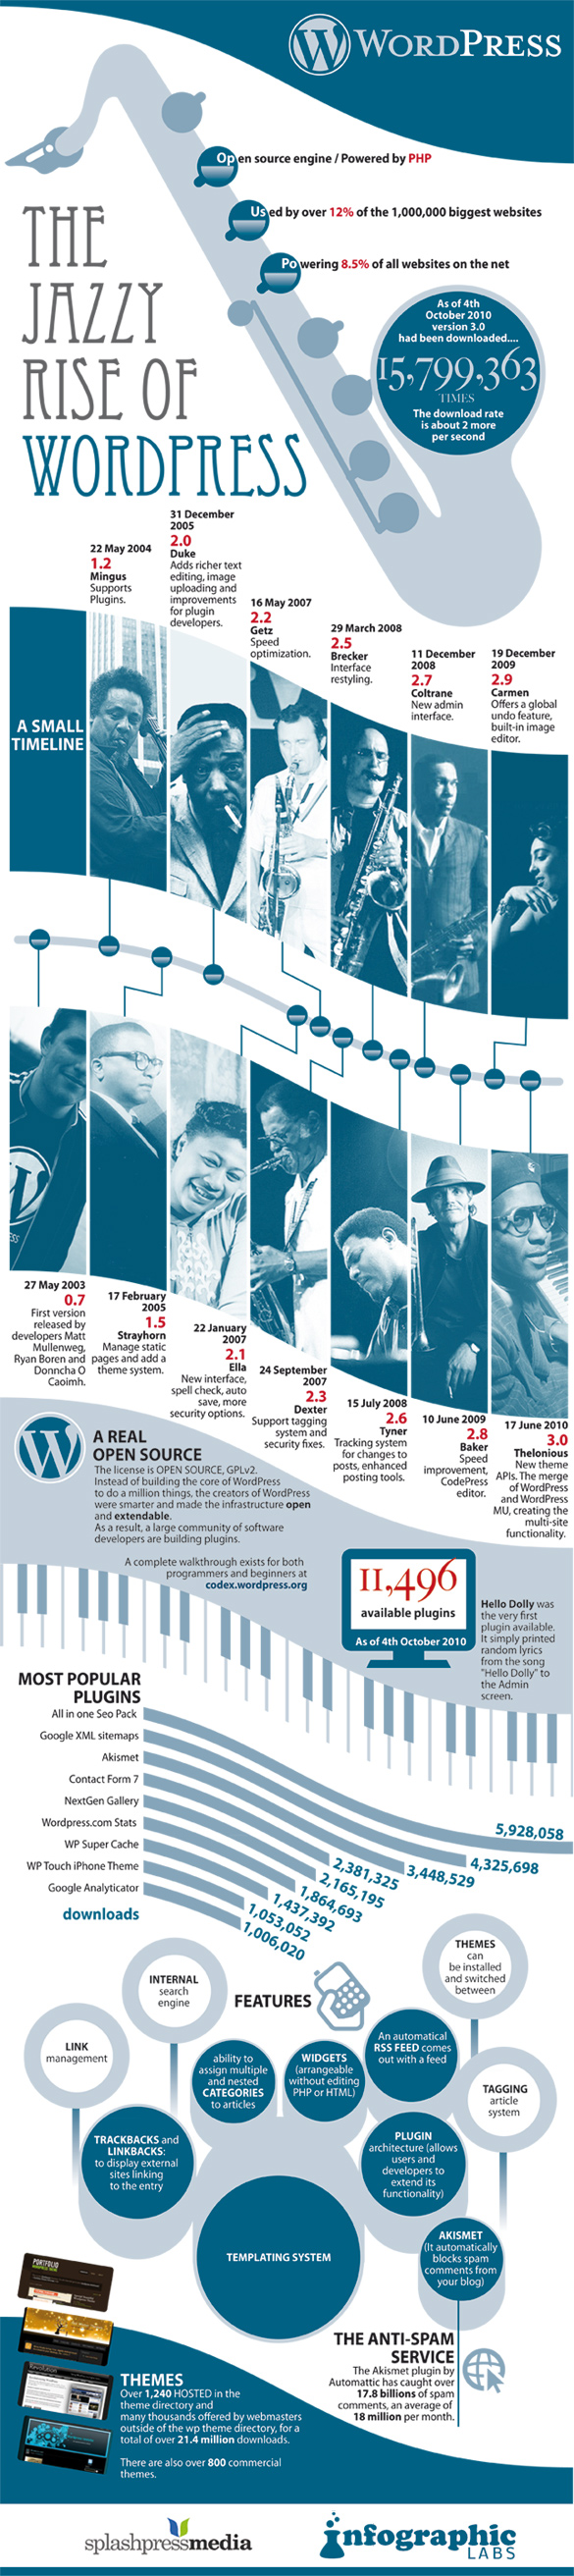 History of Wordpress